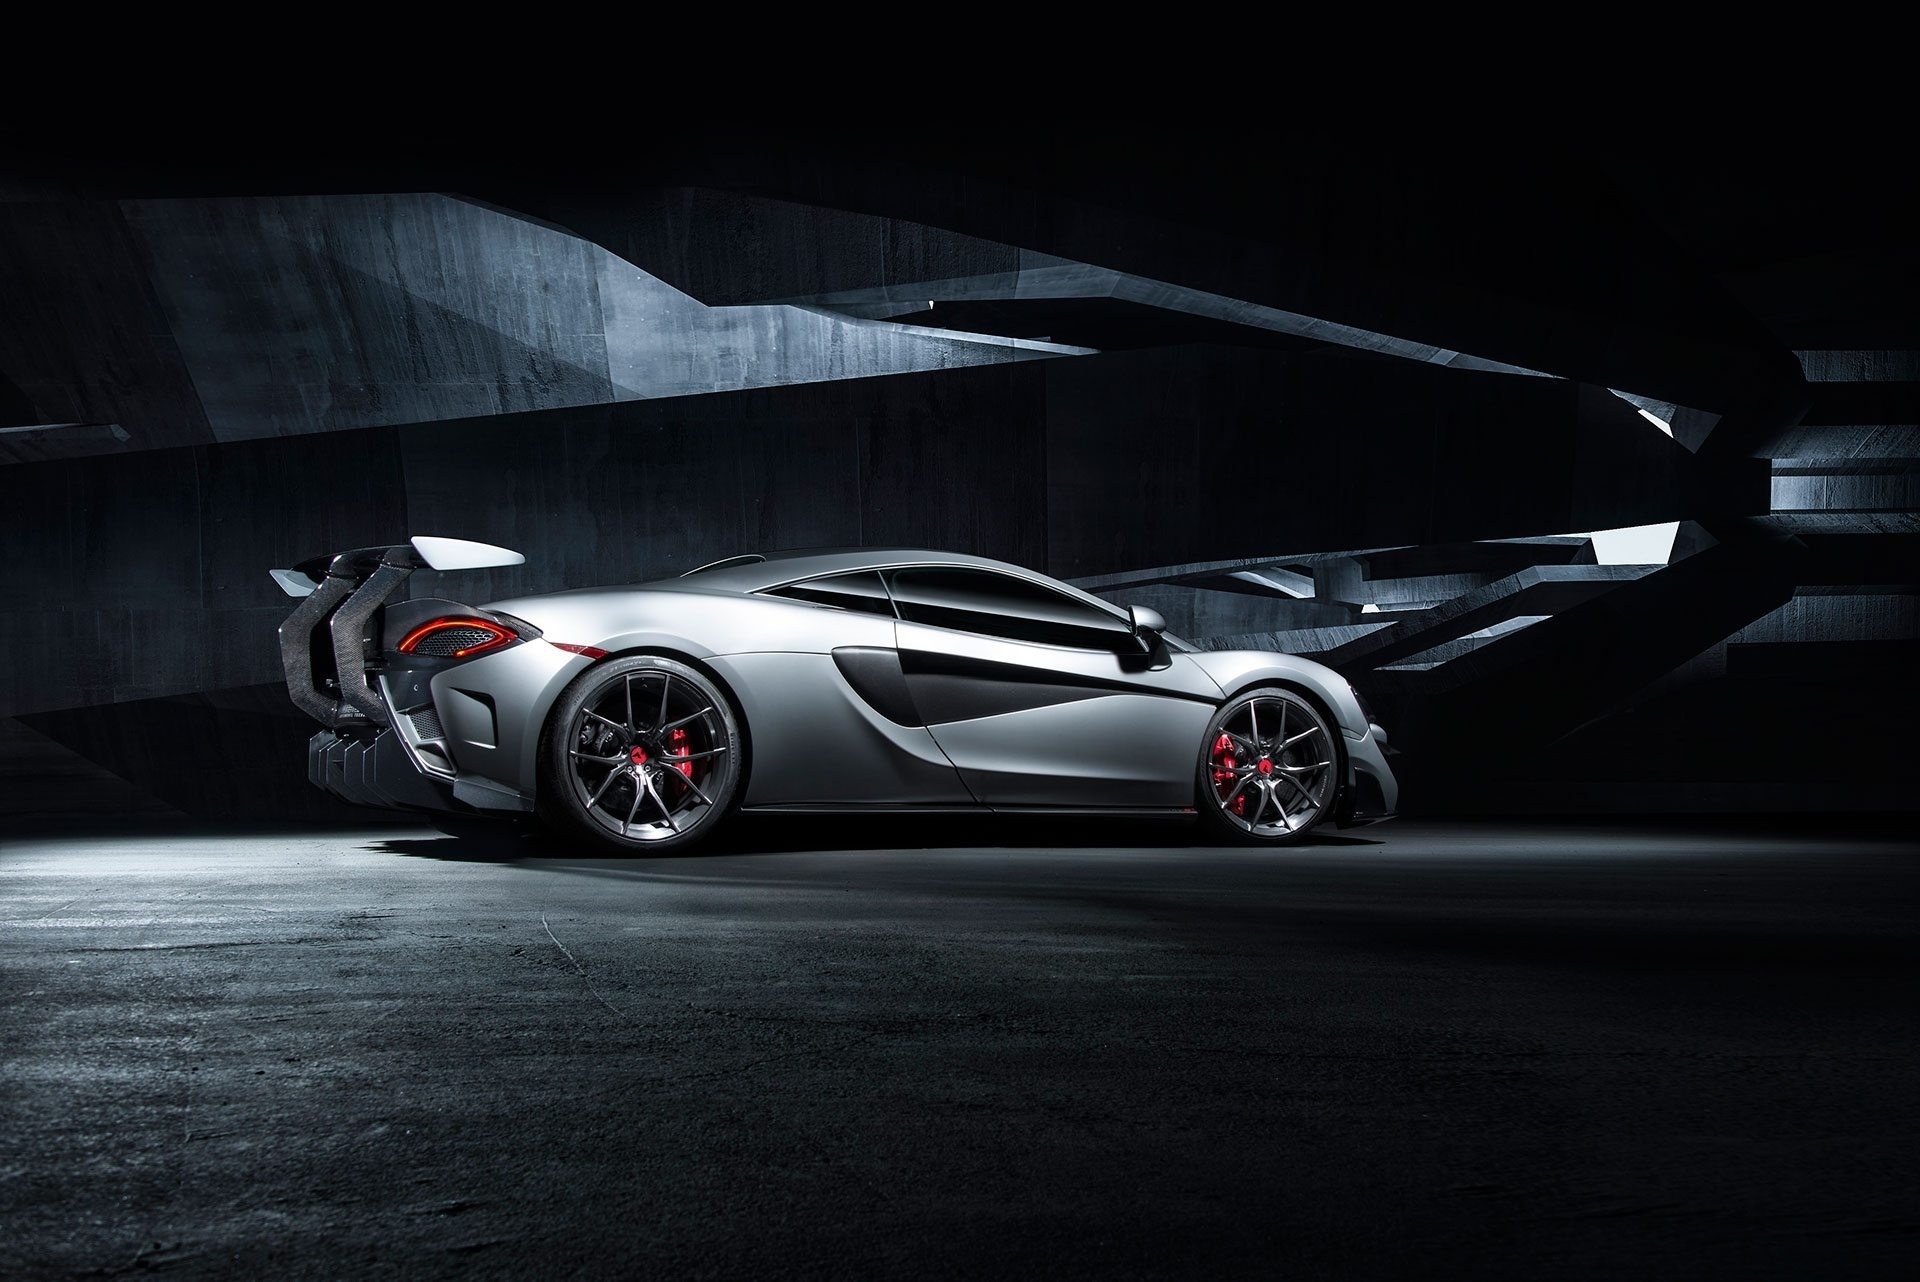 Vorsteiner Nero body kit for McLaren 570S carbon fiber